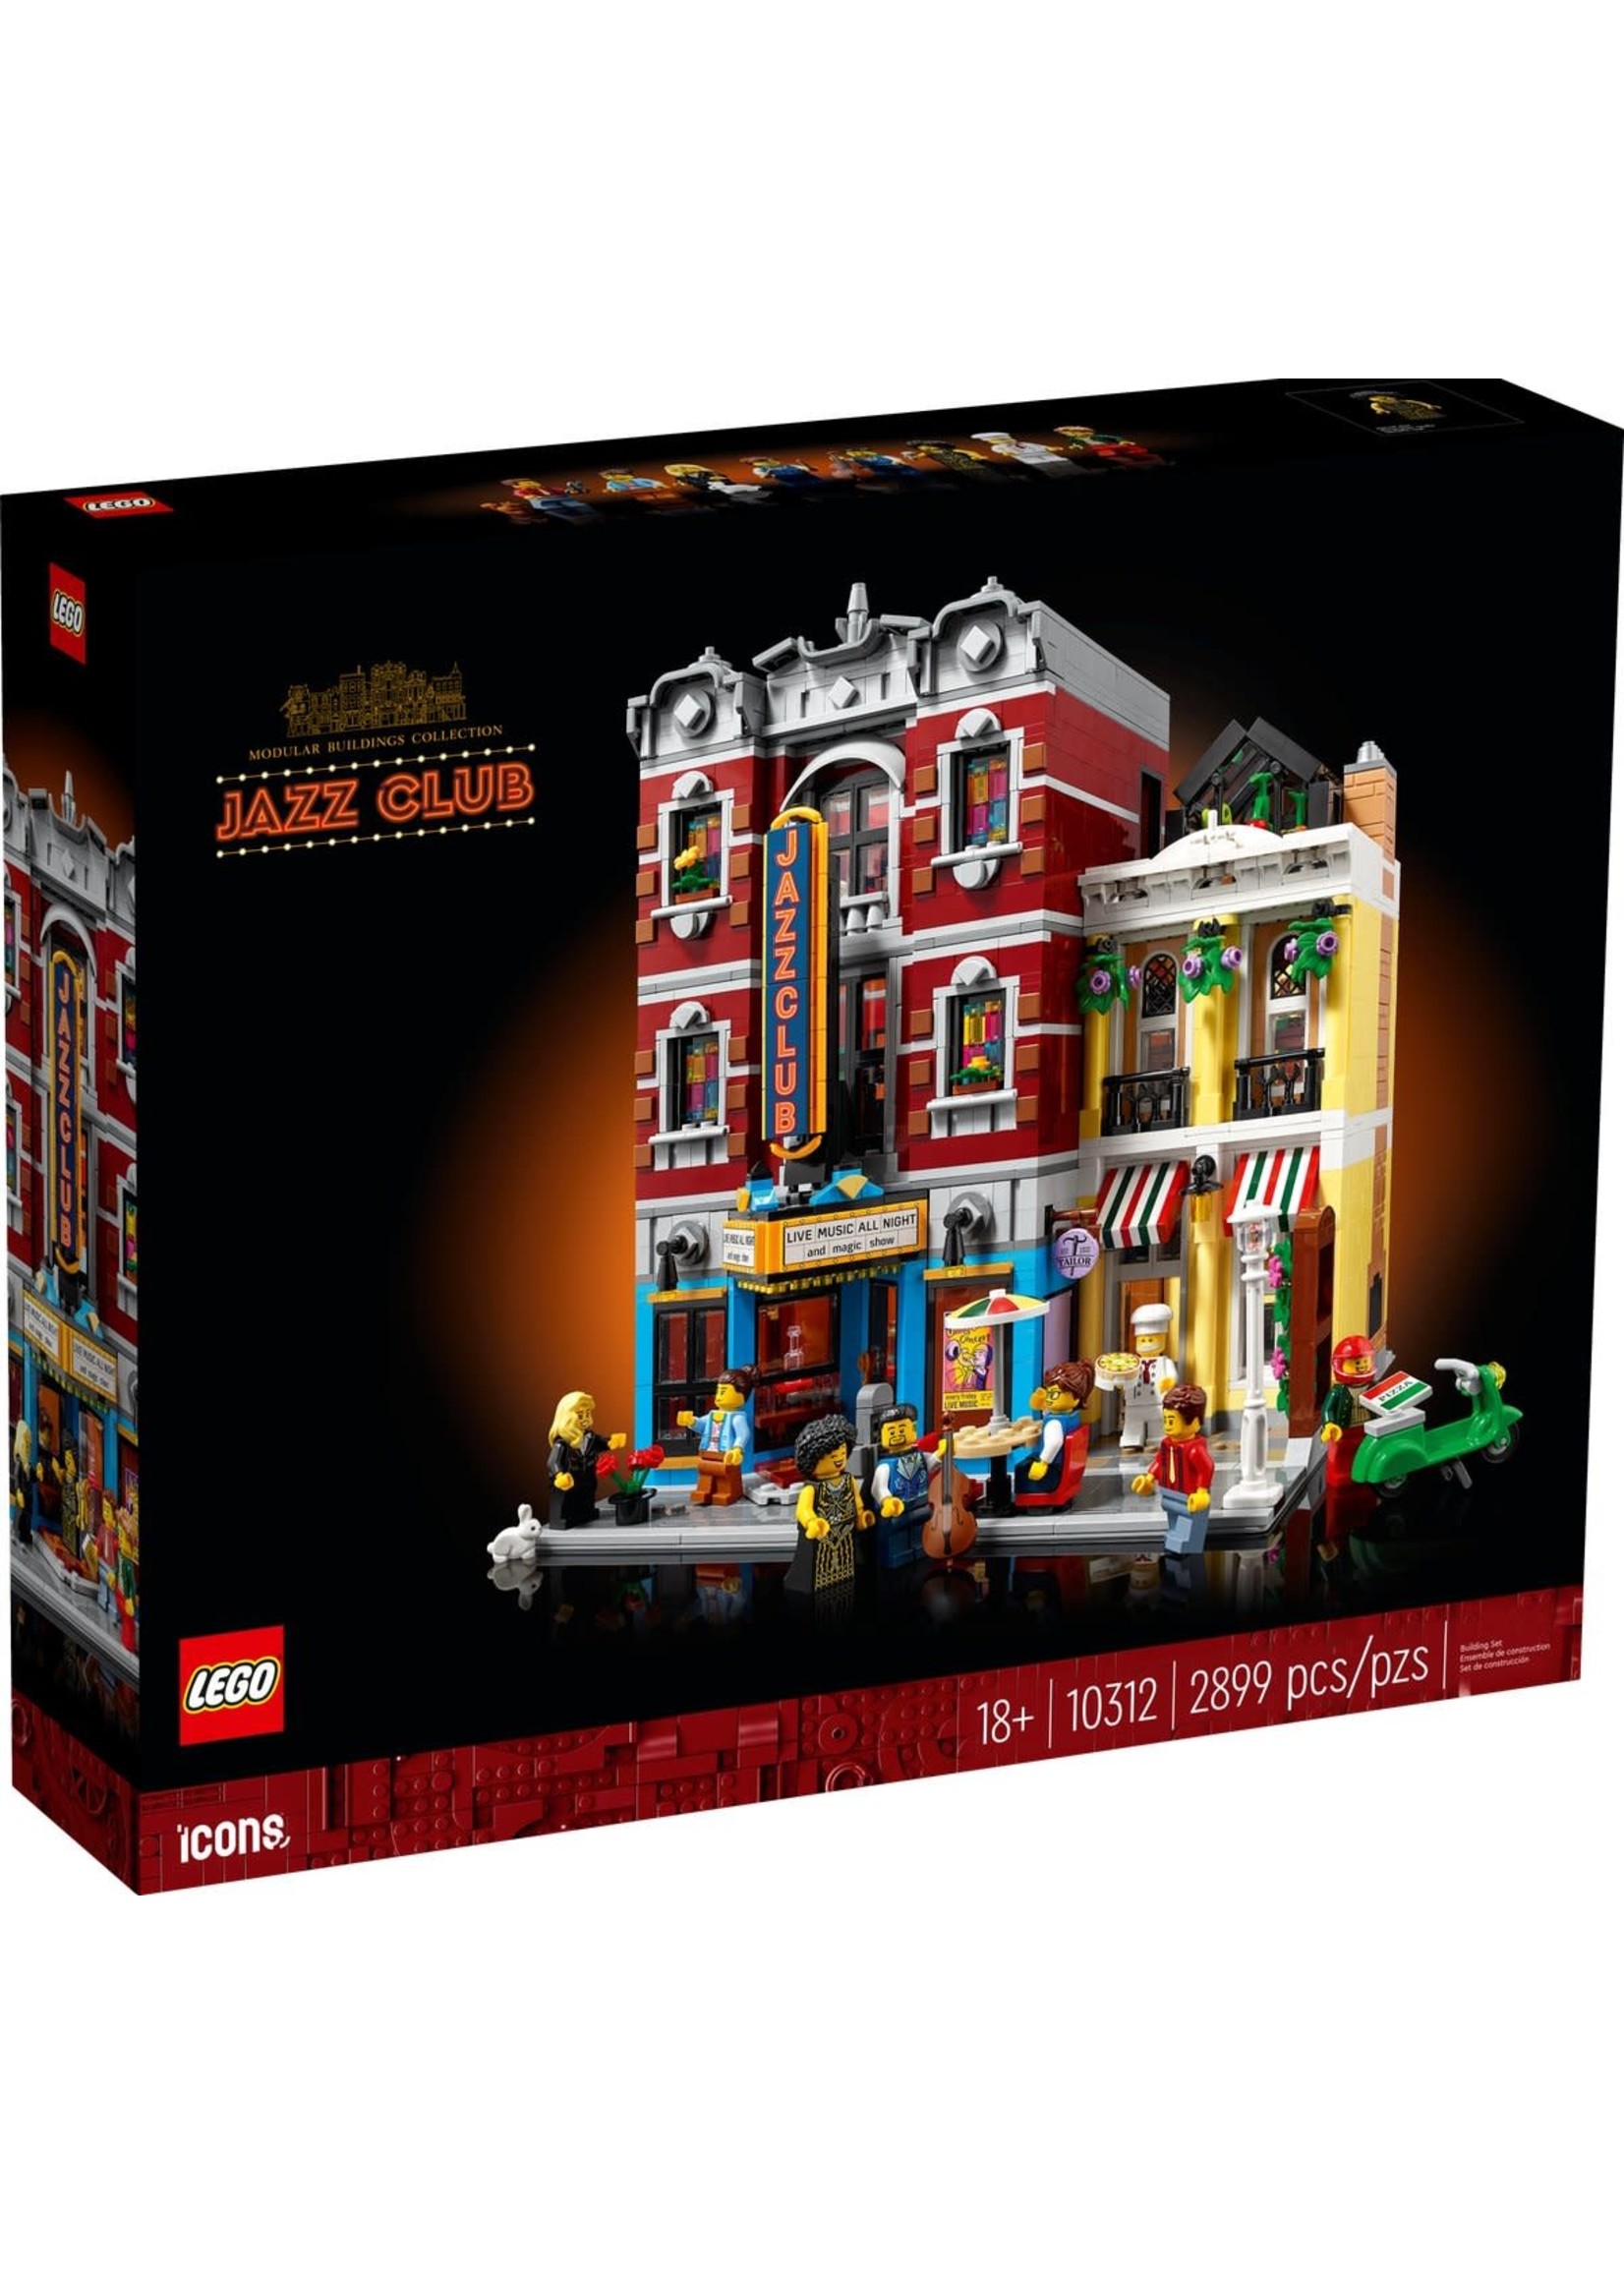 Lego LEGO (10312) - Jazz Club